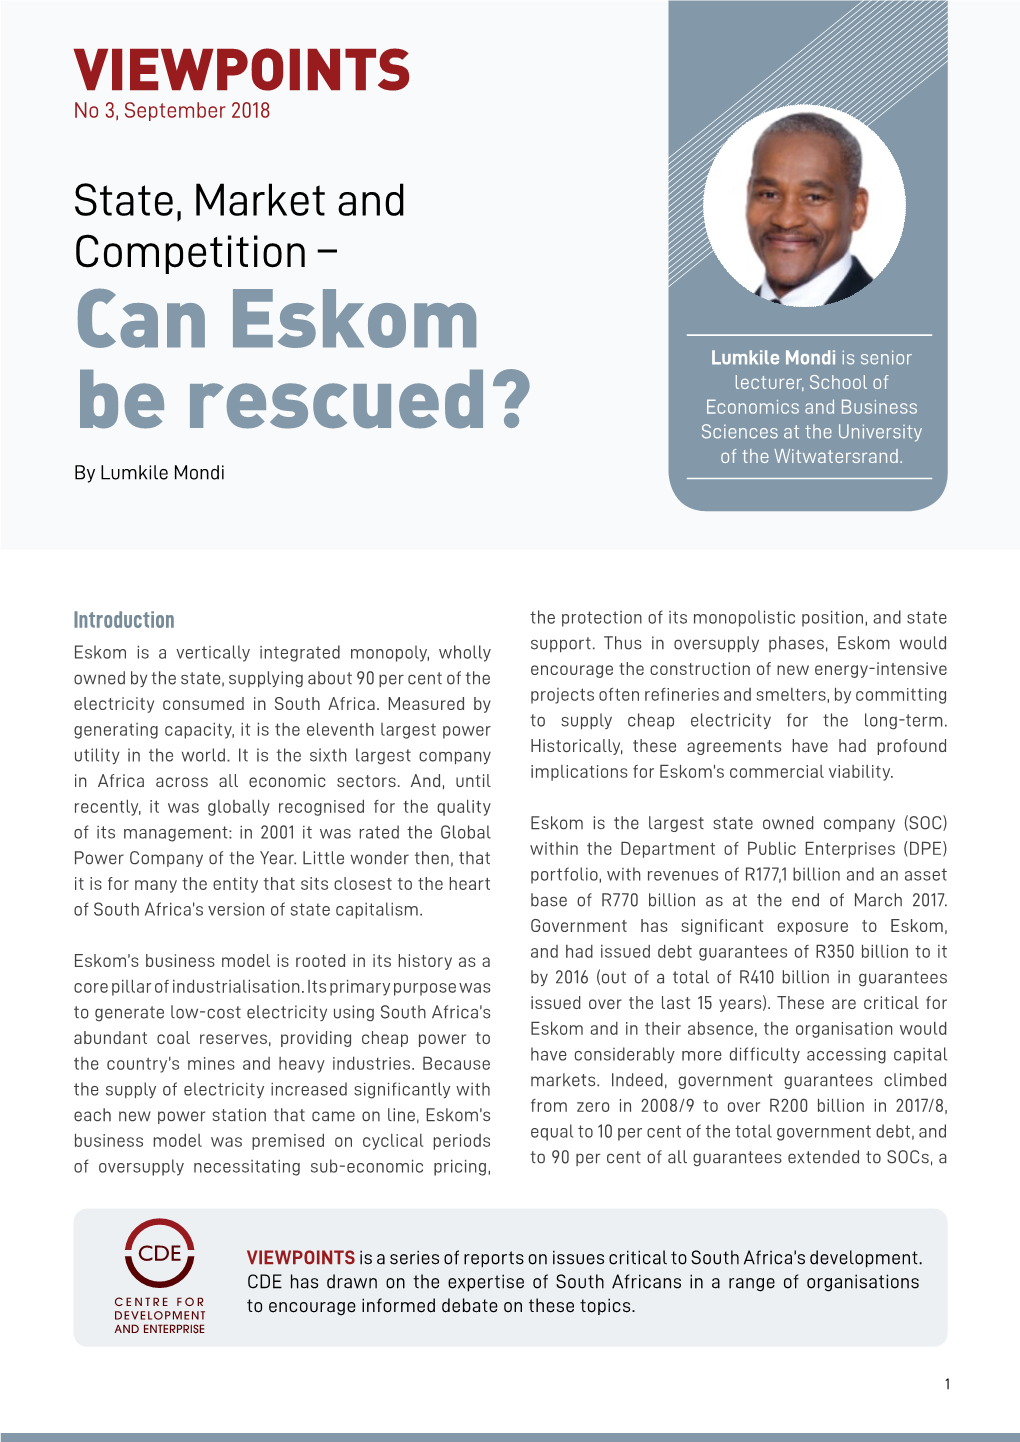 Can Eskom Be Rescued?